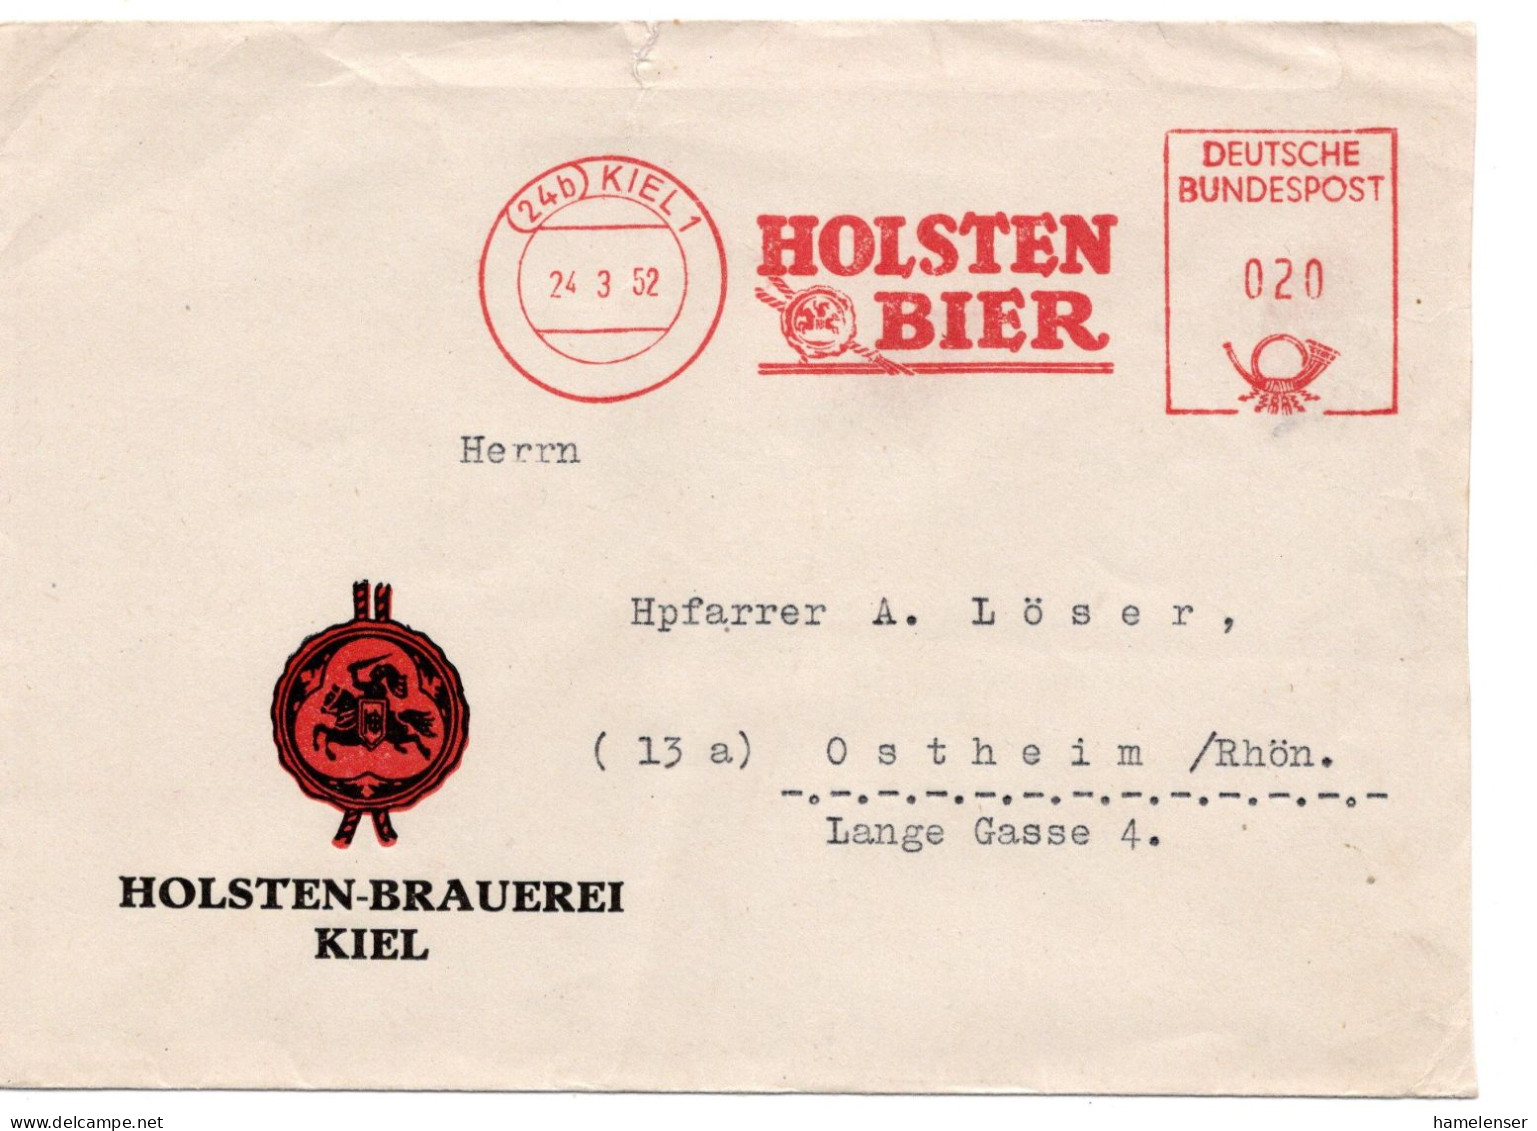 65016 - Bund - 1952 - 20Pfg AbsFreistpl KIEL - HOLSTEN BIER A Bf -> Ostheim, Rs "Helgoland Ruft!"-Aufkleber - Bier